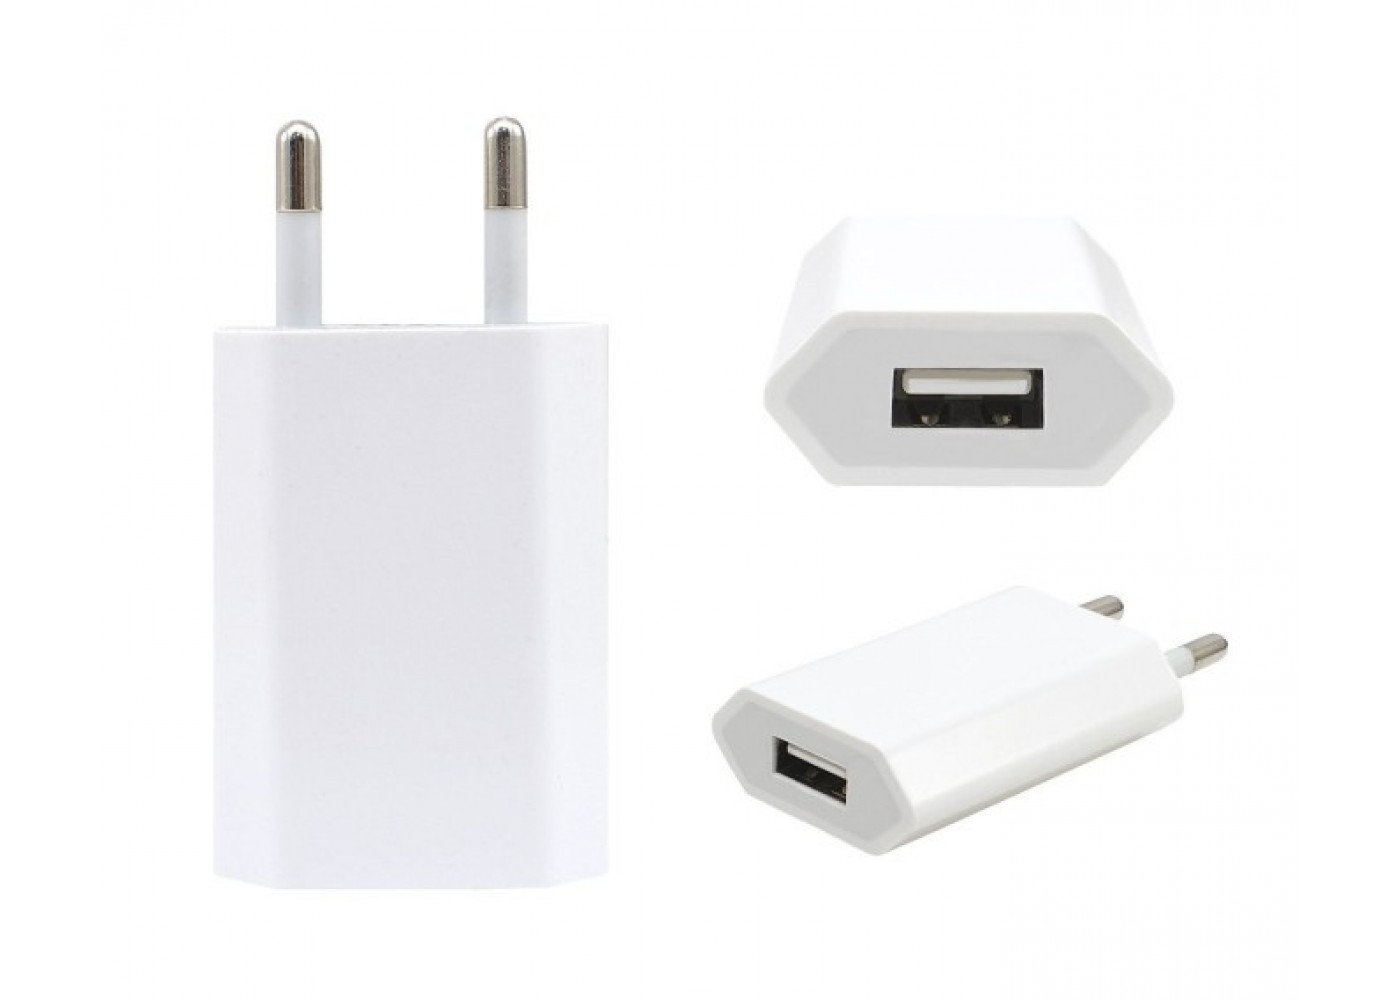 Сетевое зарядное устройство Apple для iPhone USB Power Adapter 5W MD813ZM/A